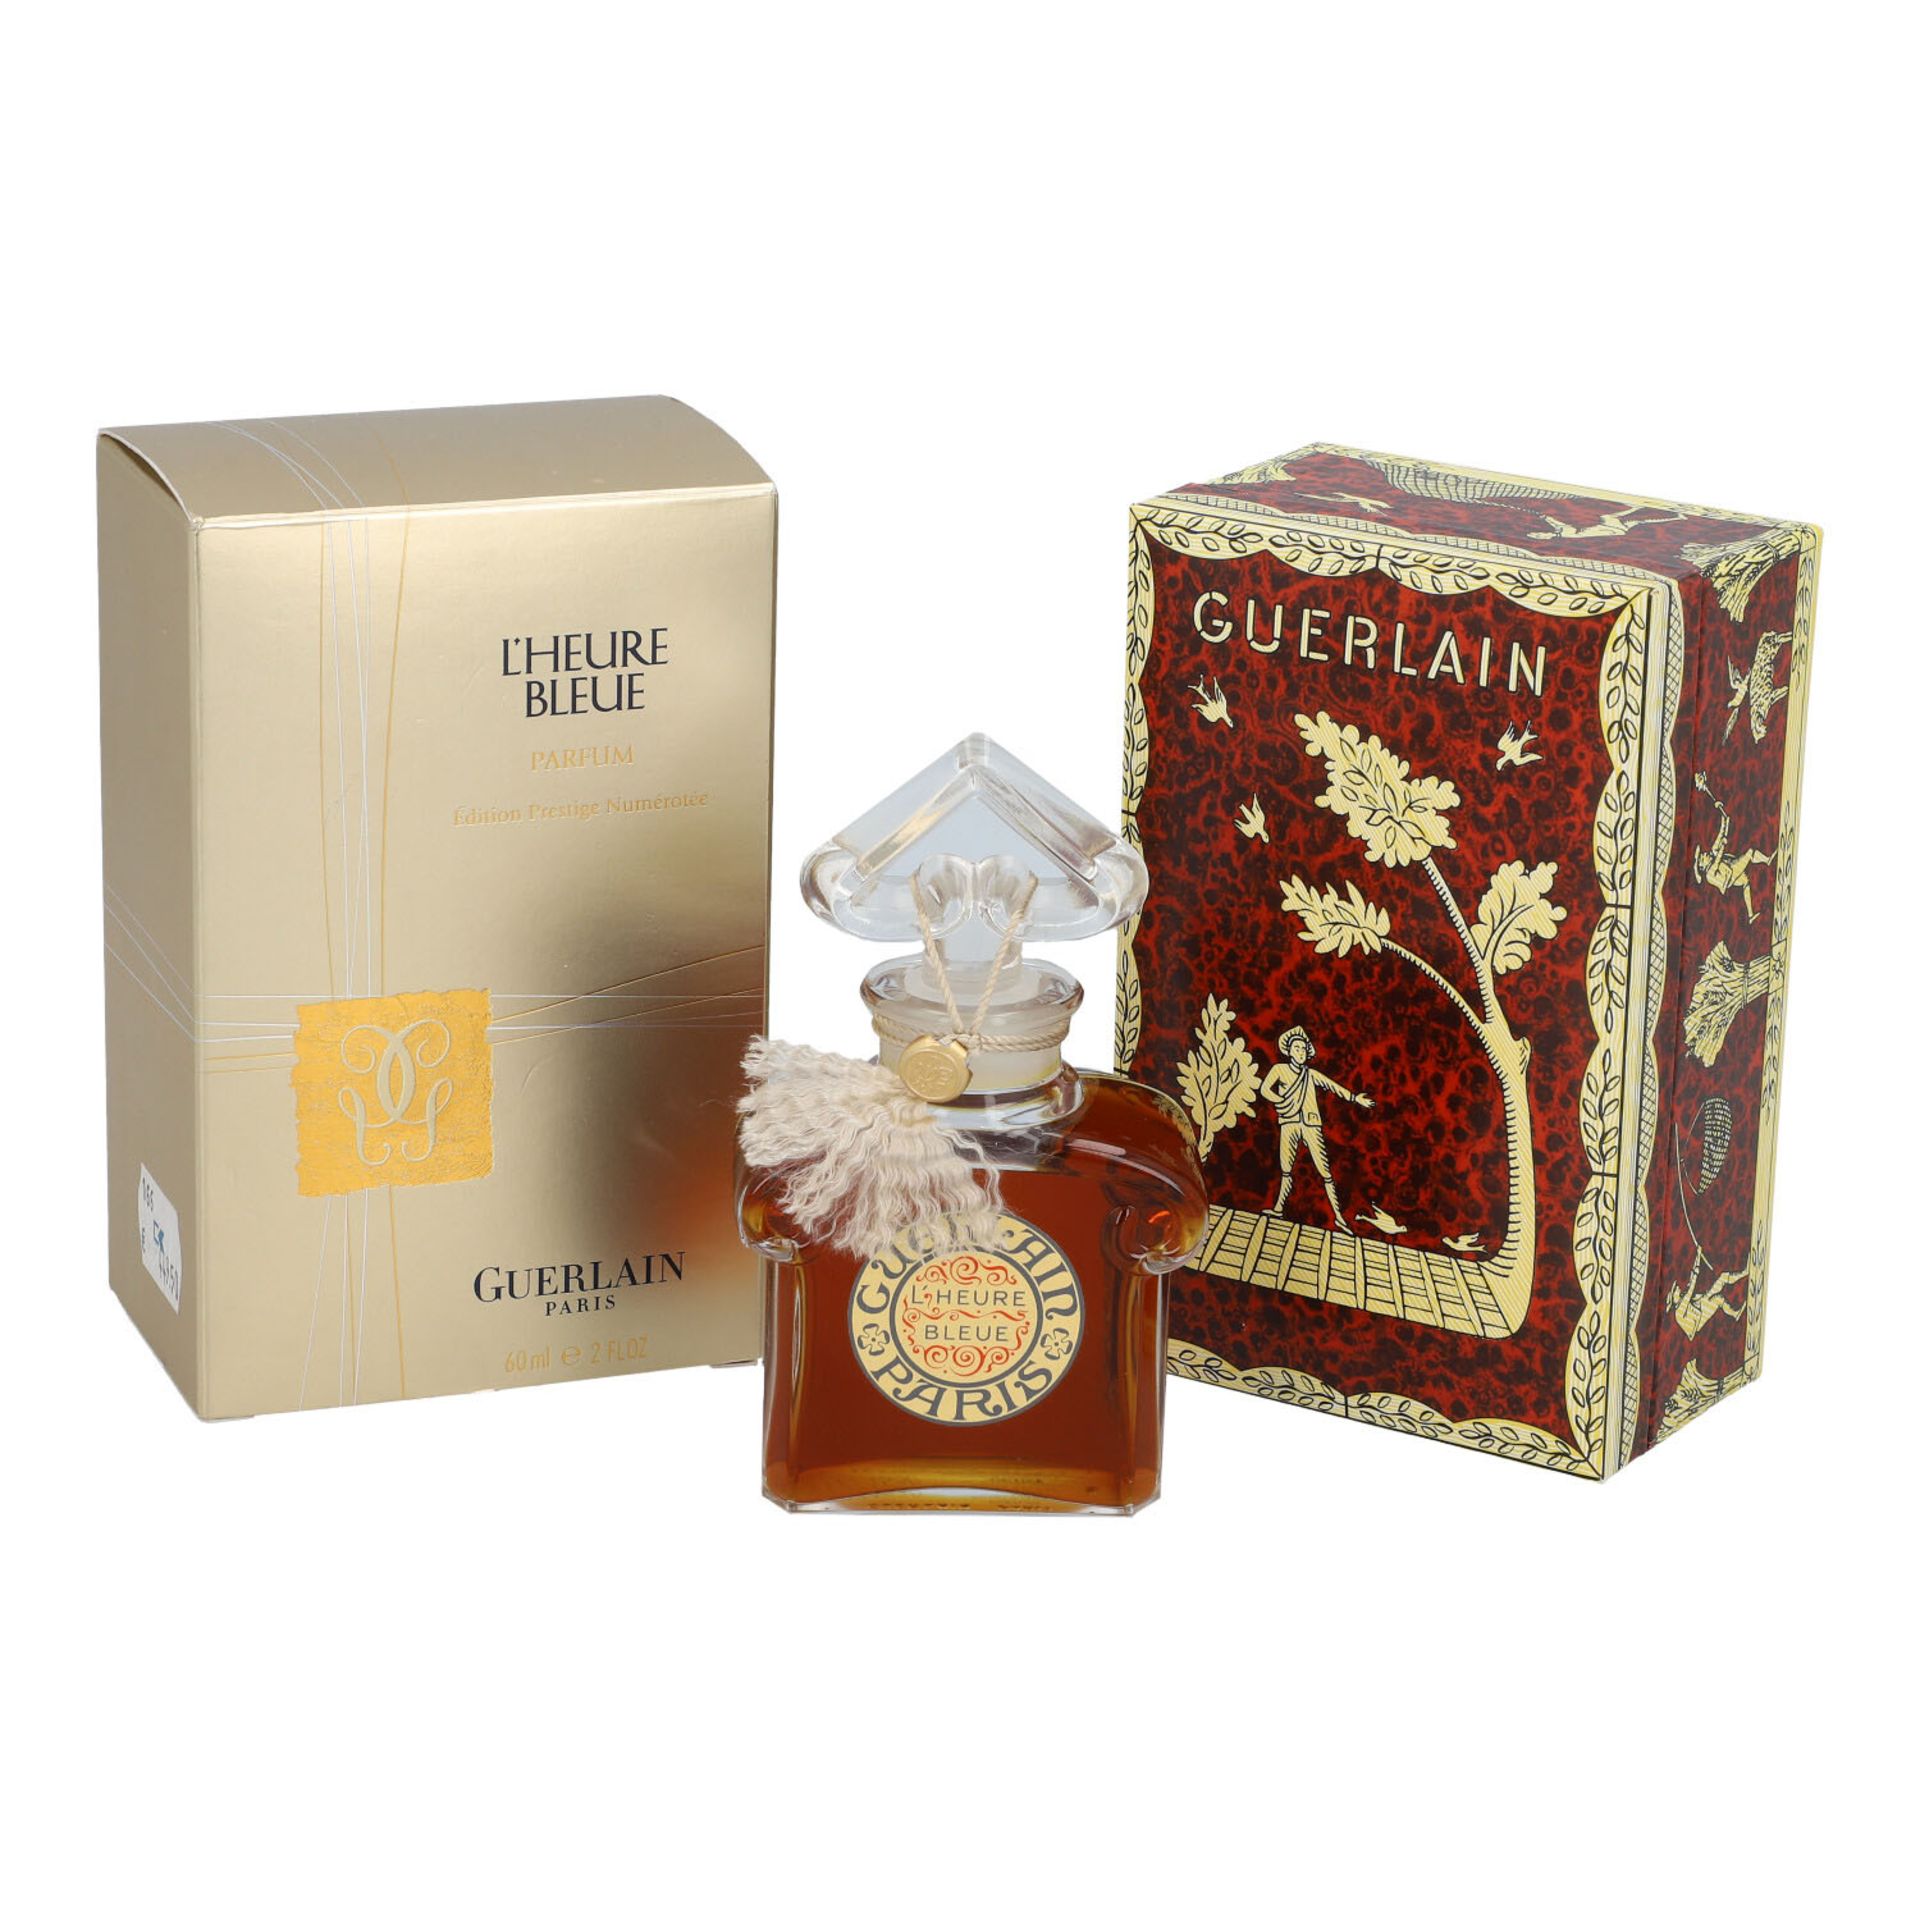 GUERLAIN Parfum "L'HEURE BLEUE", Koll.: 1912, Kaufpreis: je 449,50€. - Bild 3 aus 4